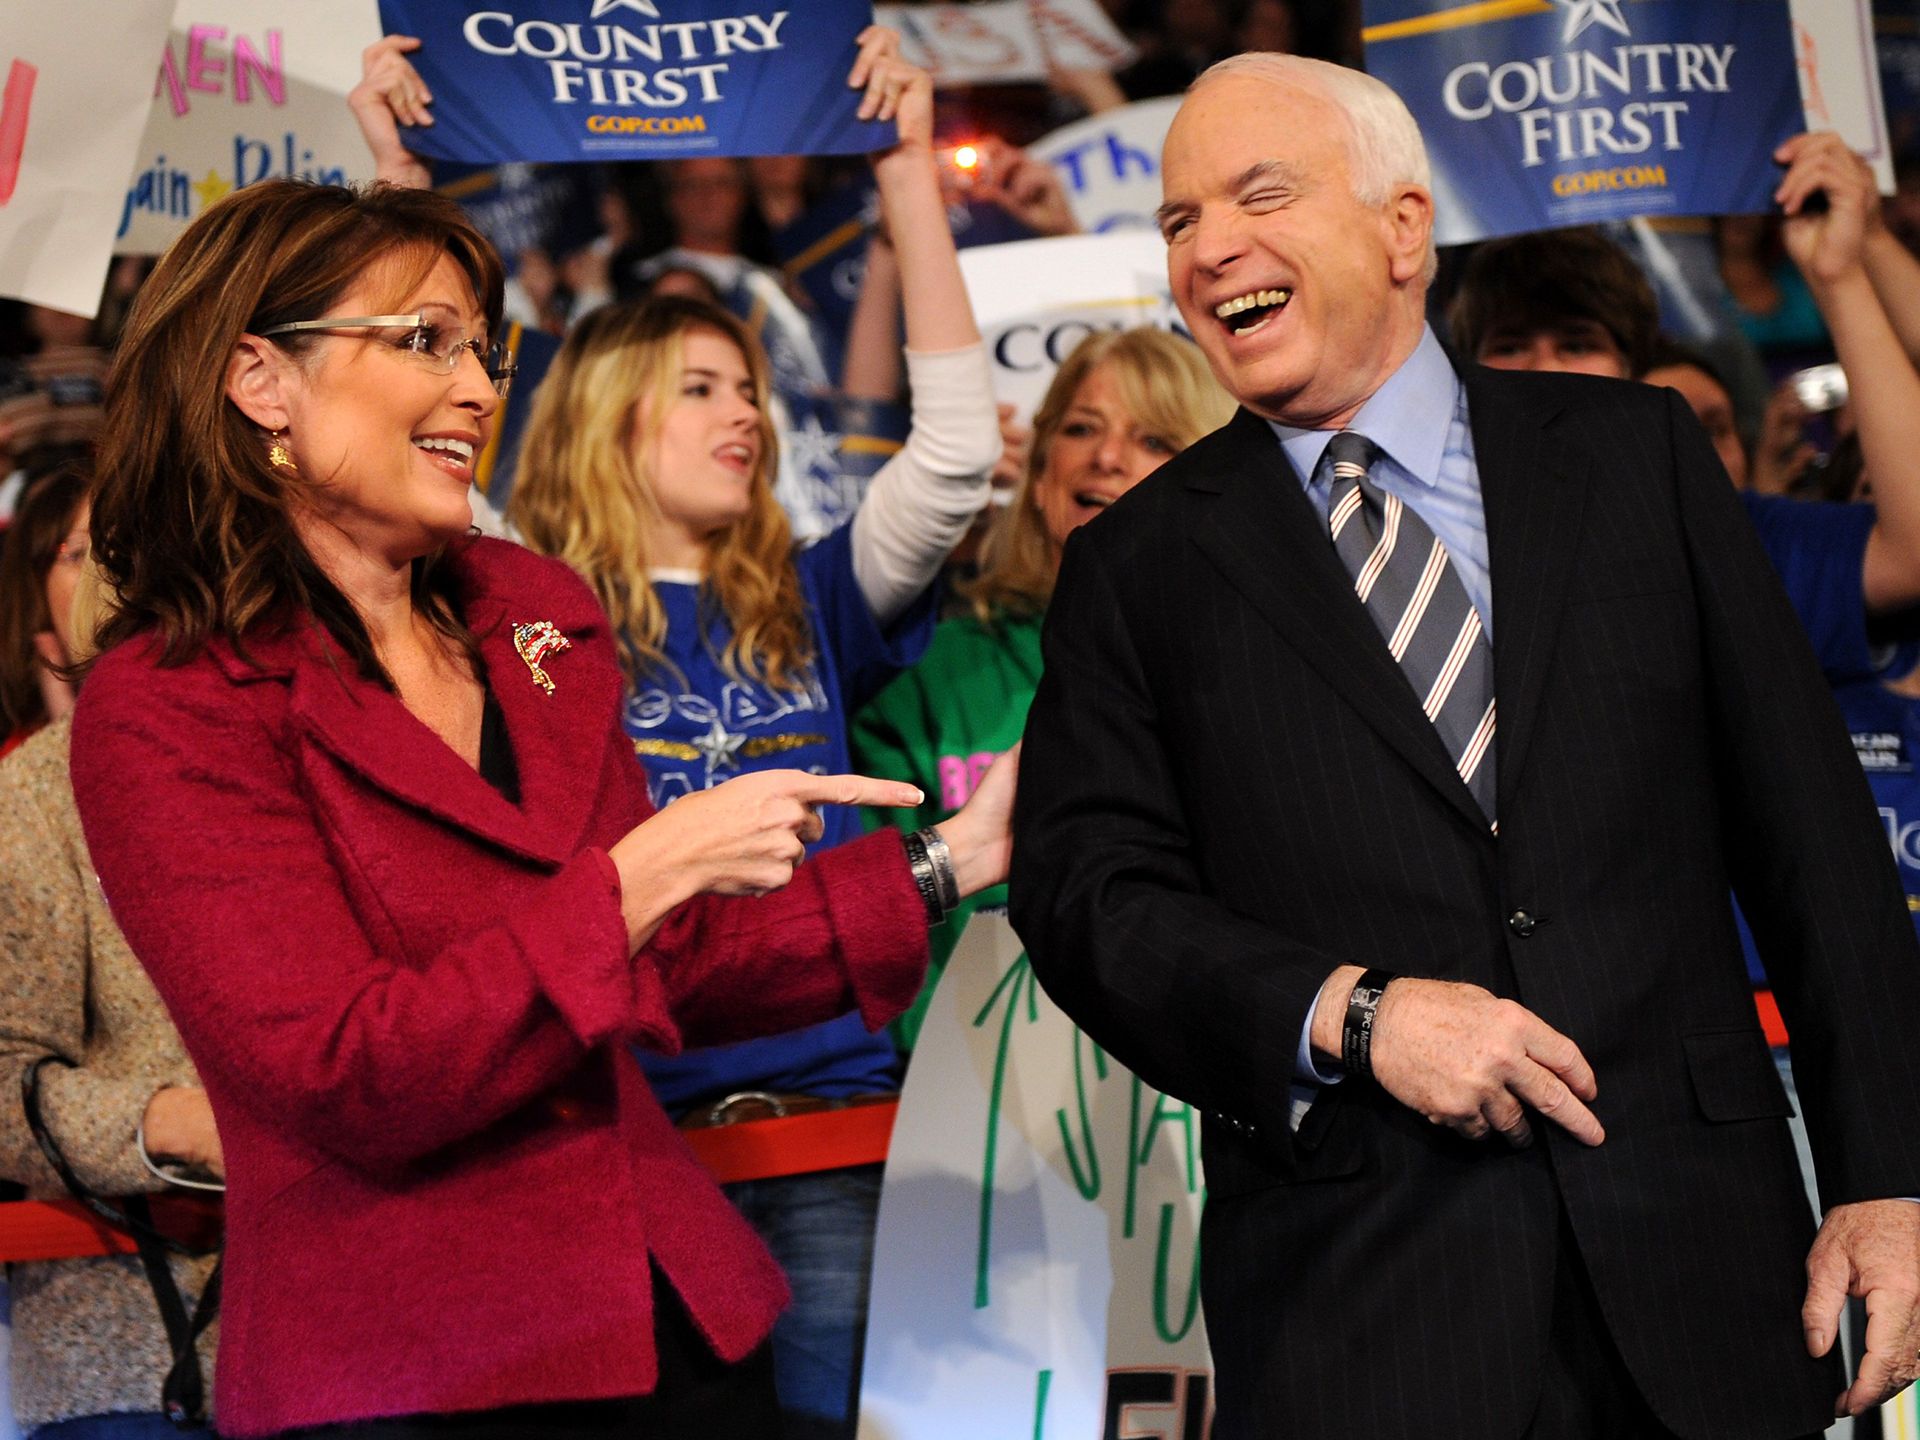 Zijdelings Bepalen groot McCain when he picked Palin: "F--- it!"